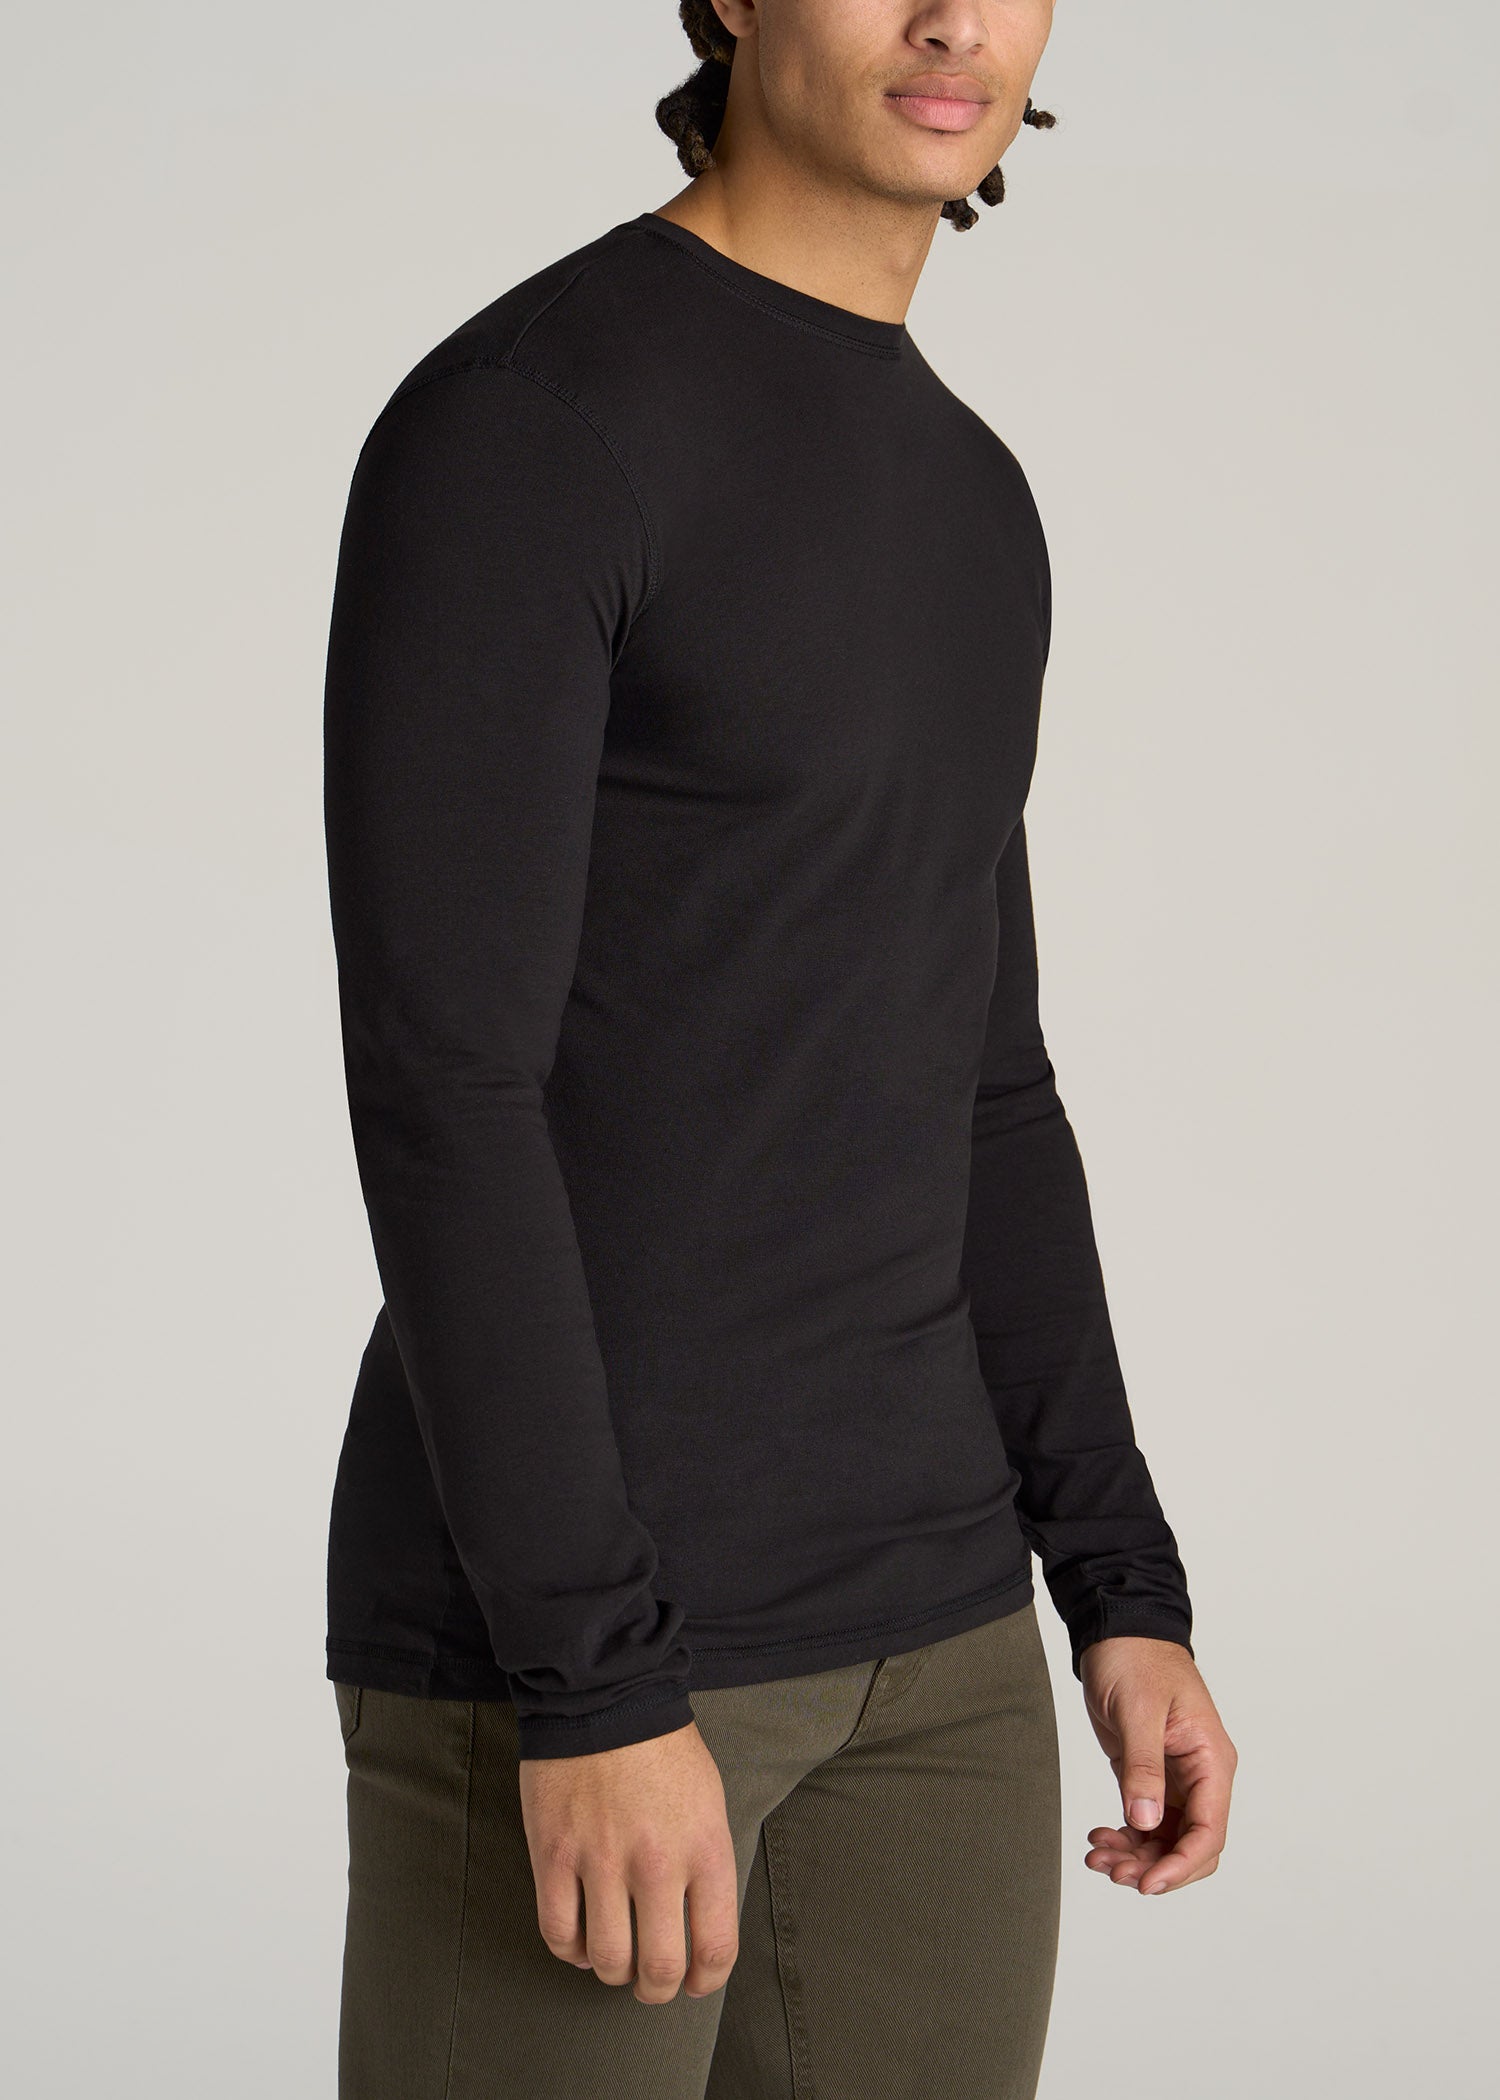 Essential black long-sleeved polo shirt